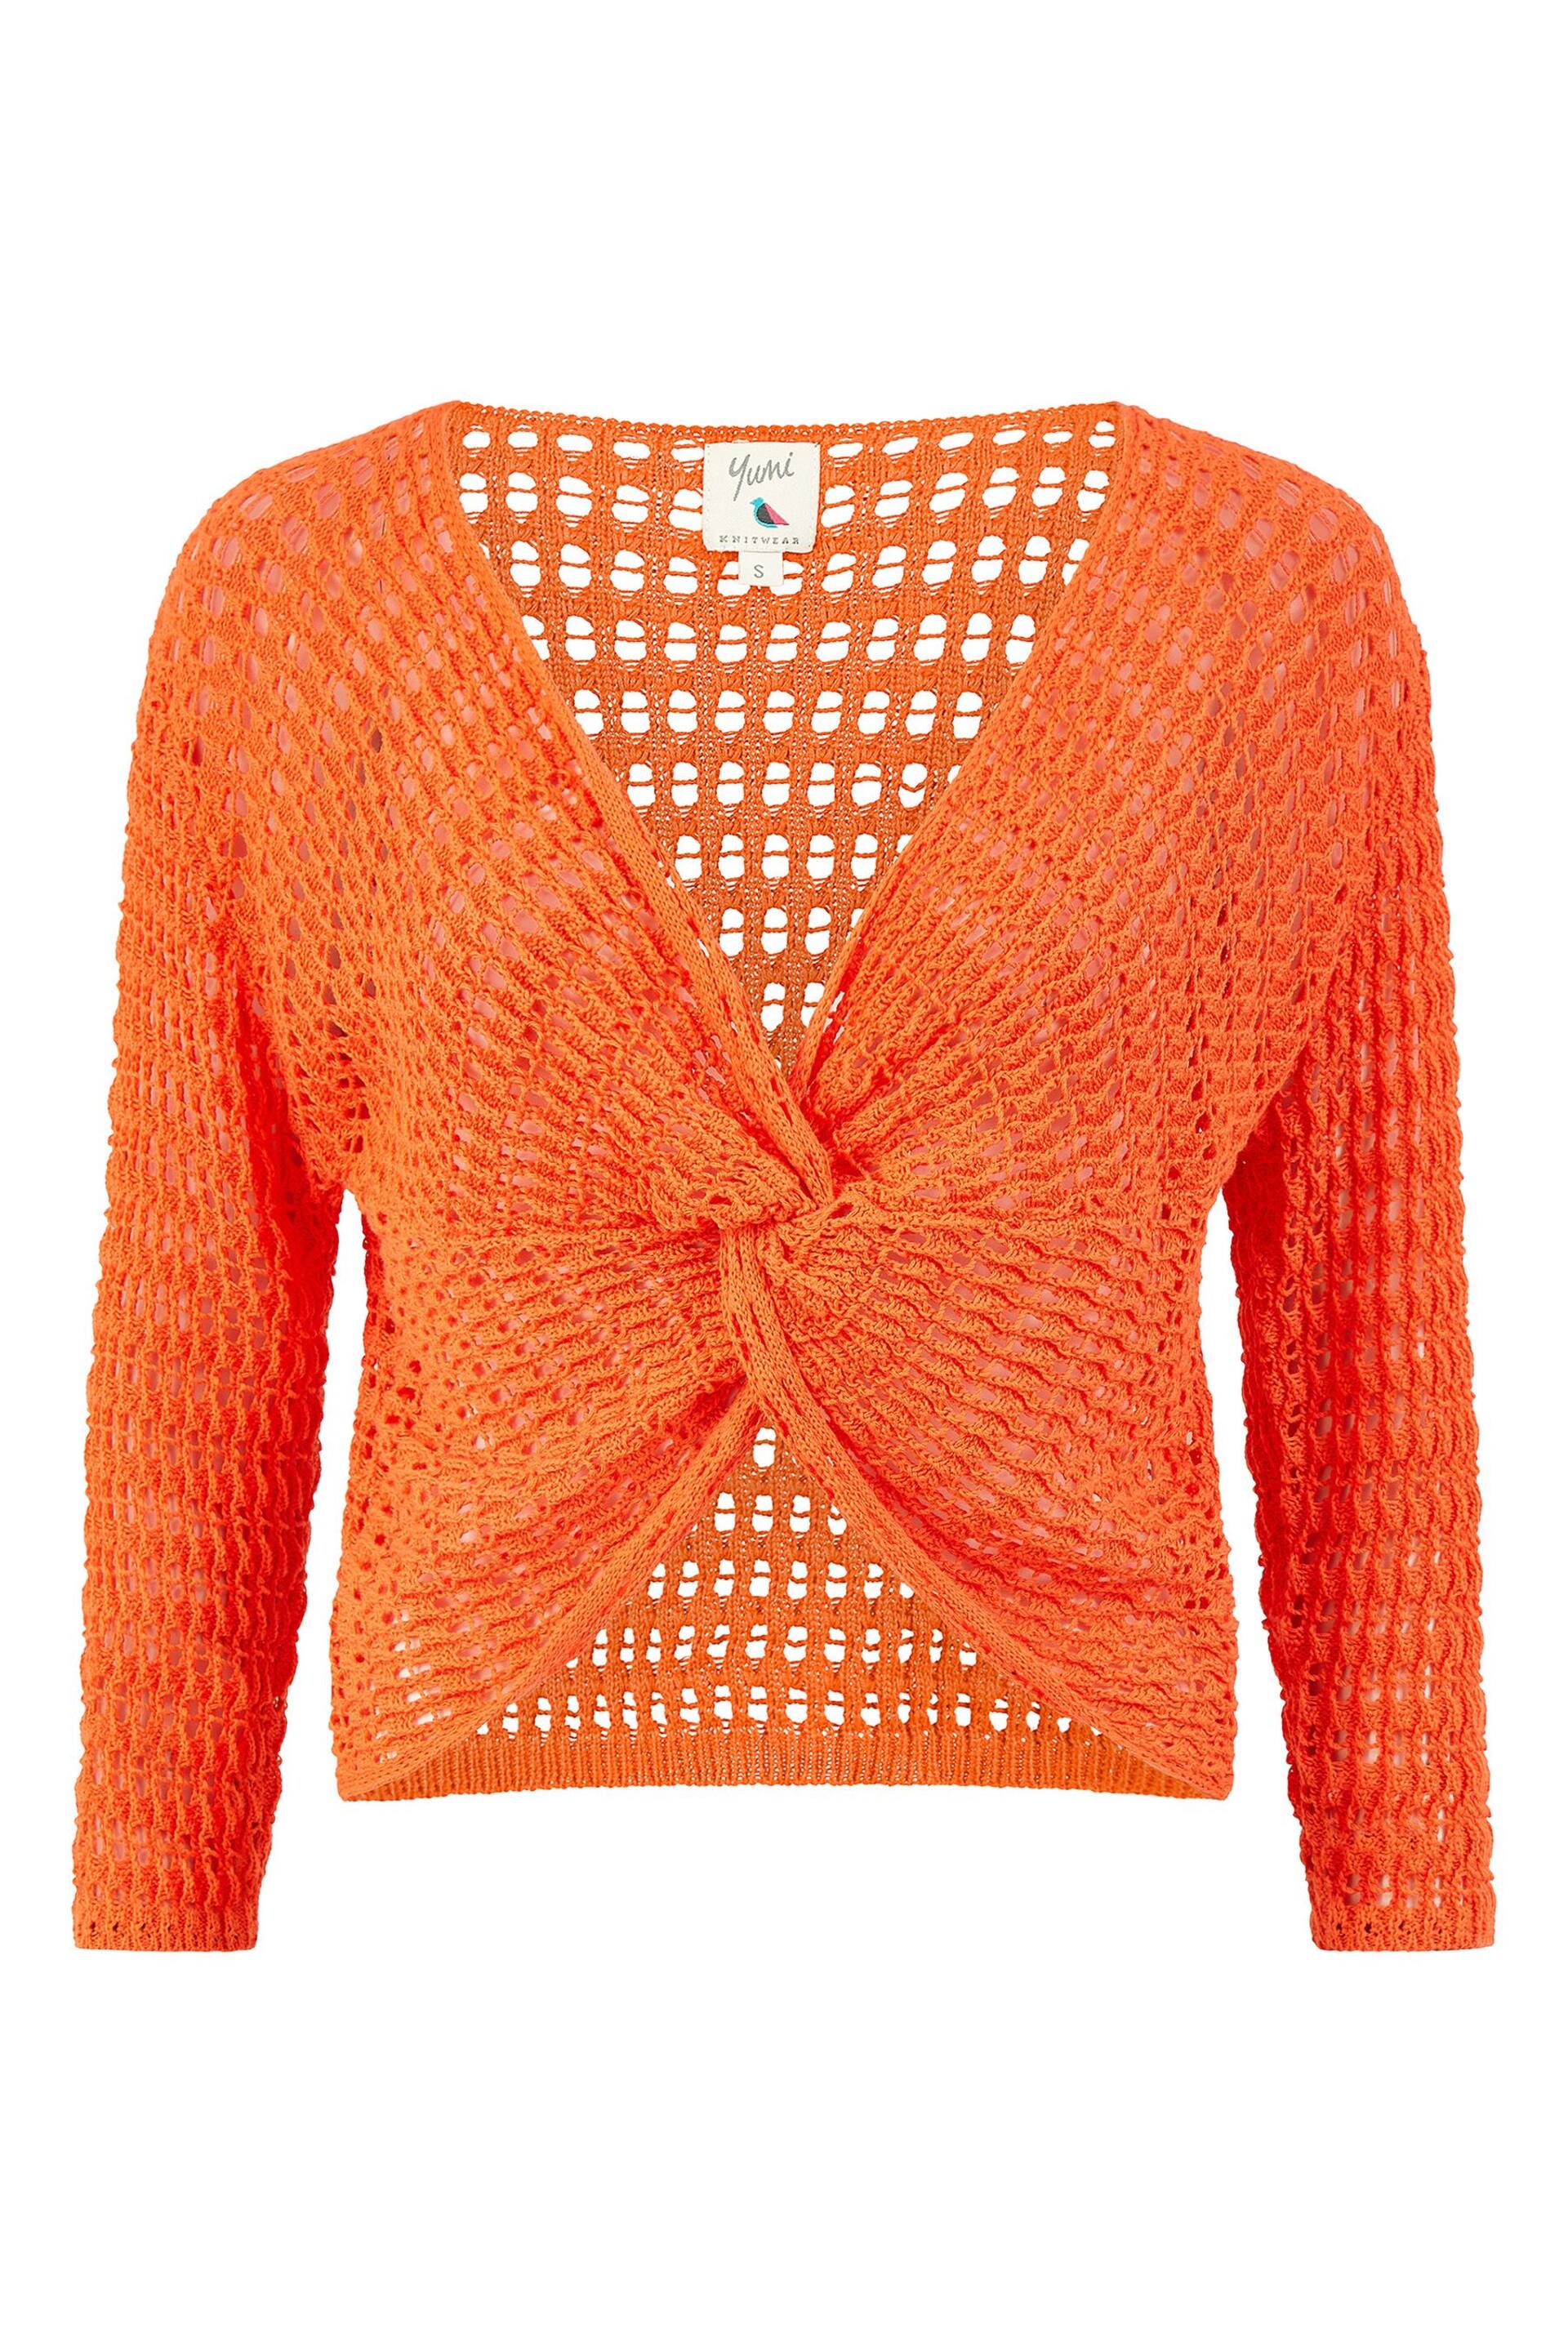 Yumi Orange Crochet Cotton Twisted Bolero Top - Image 5 of 5